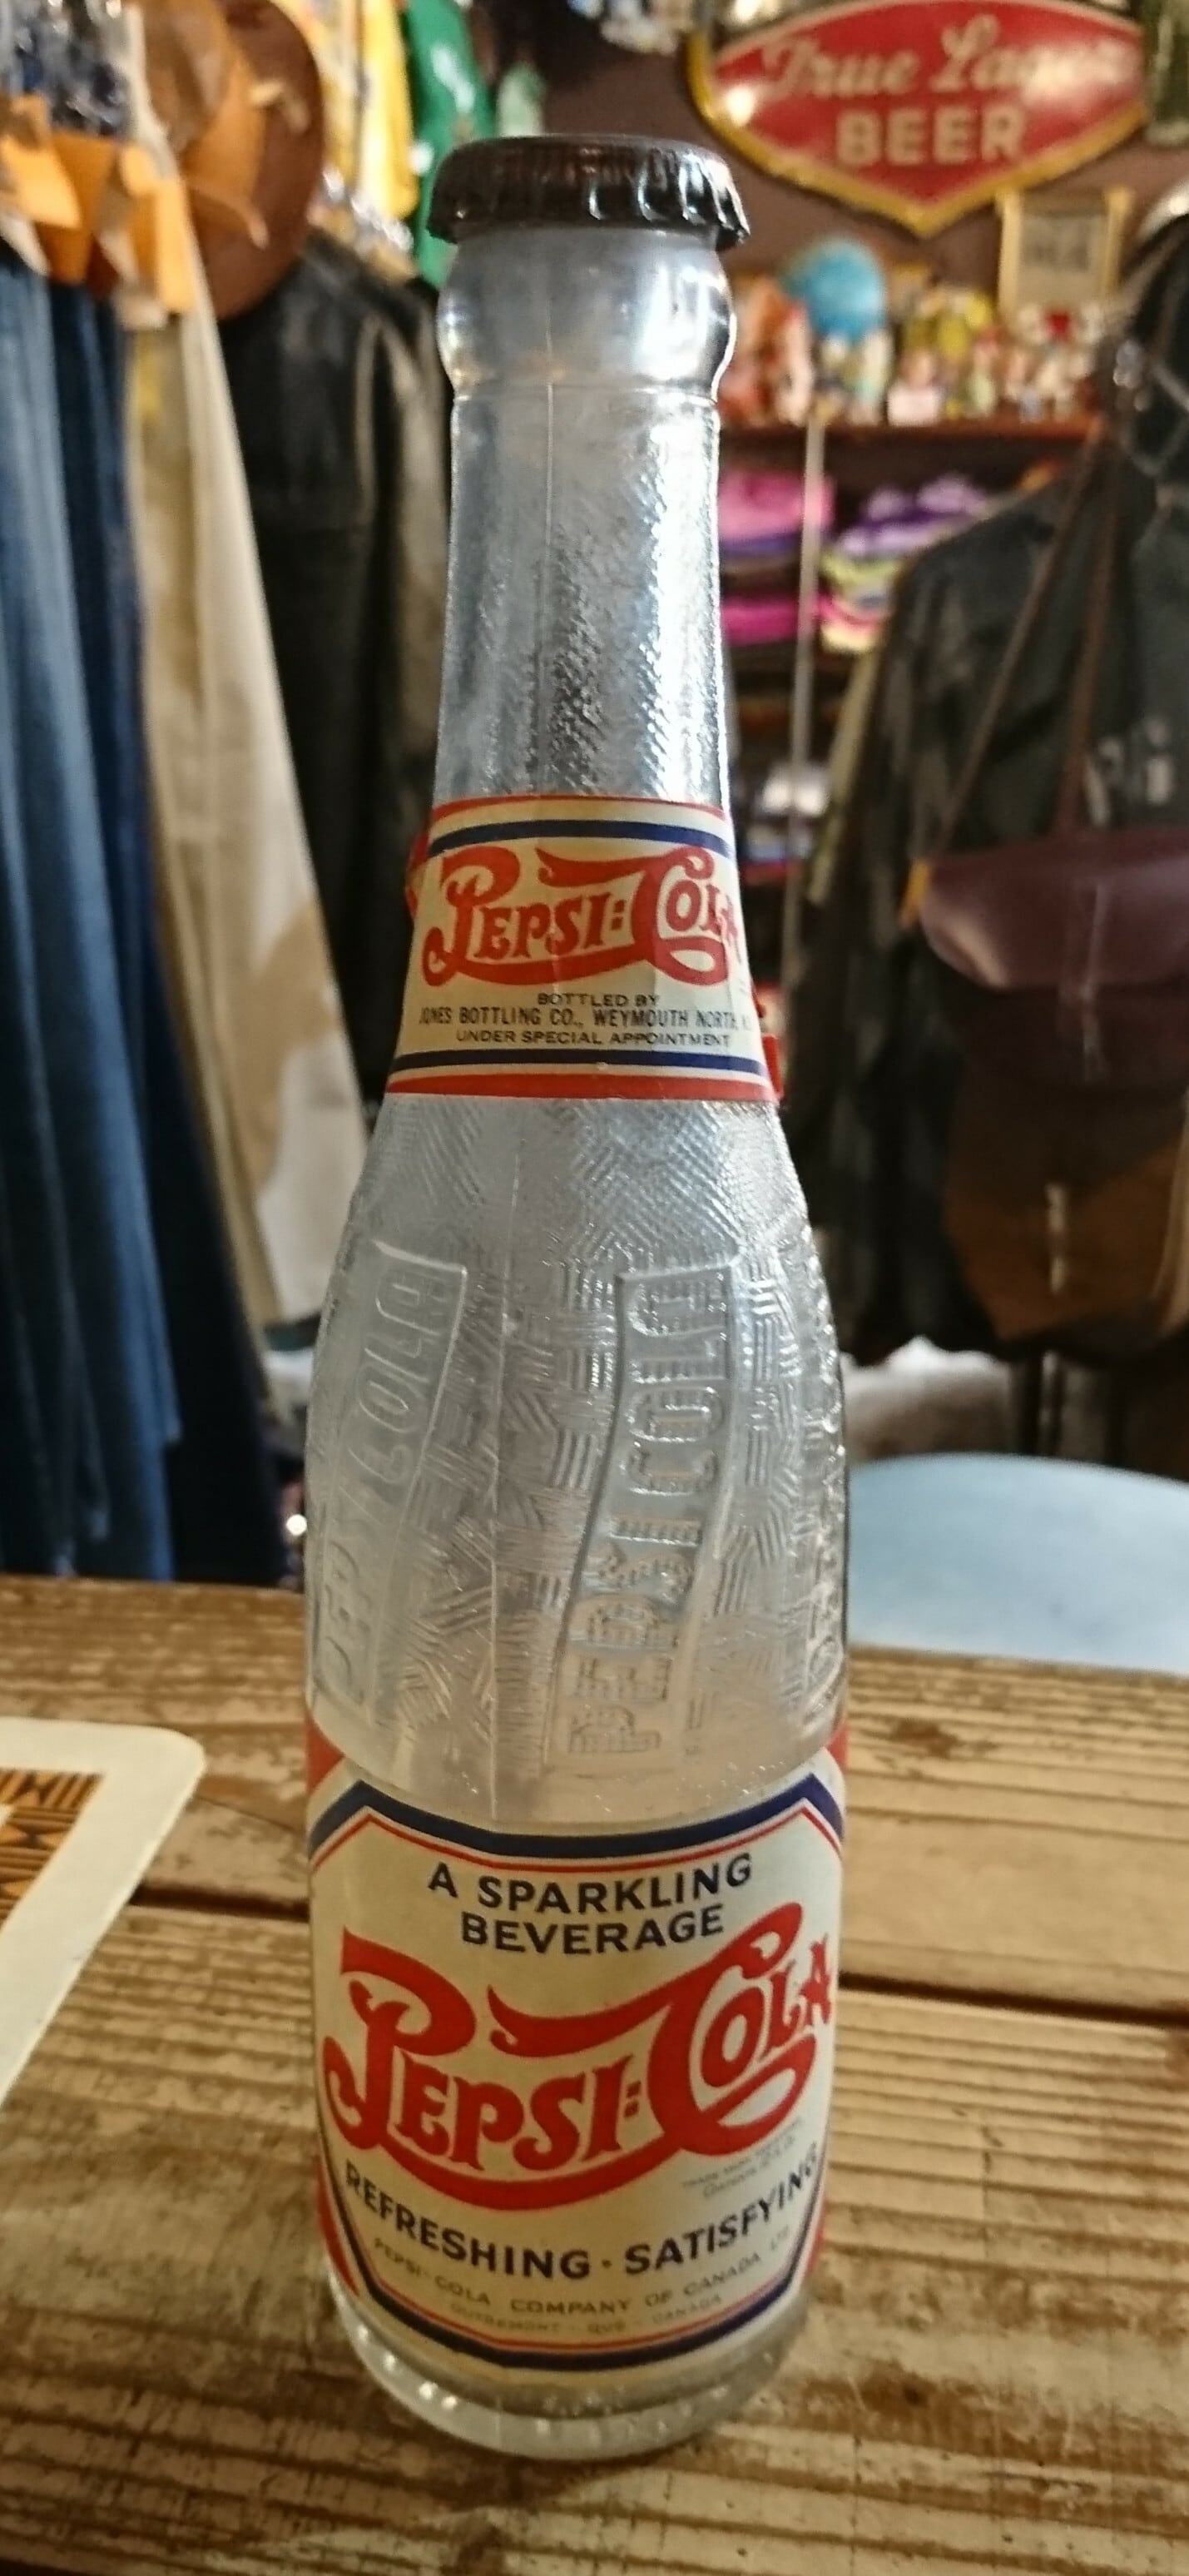 40s vintage pepsi cola bottle ヴィンテージ ペプシ コーラ 瓶 ボトル